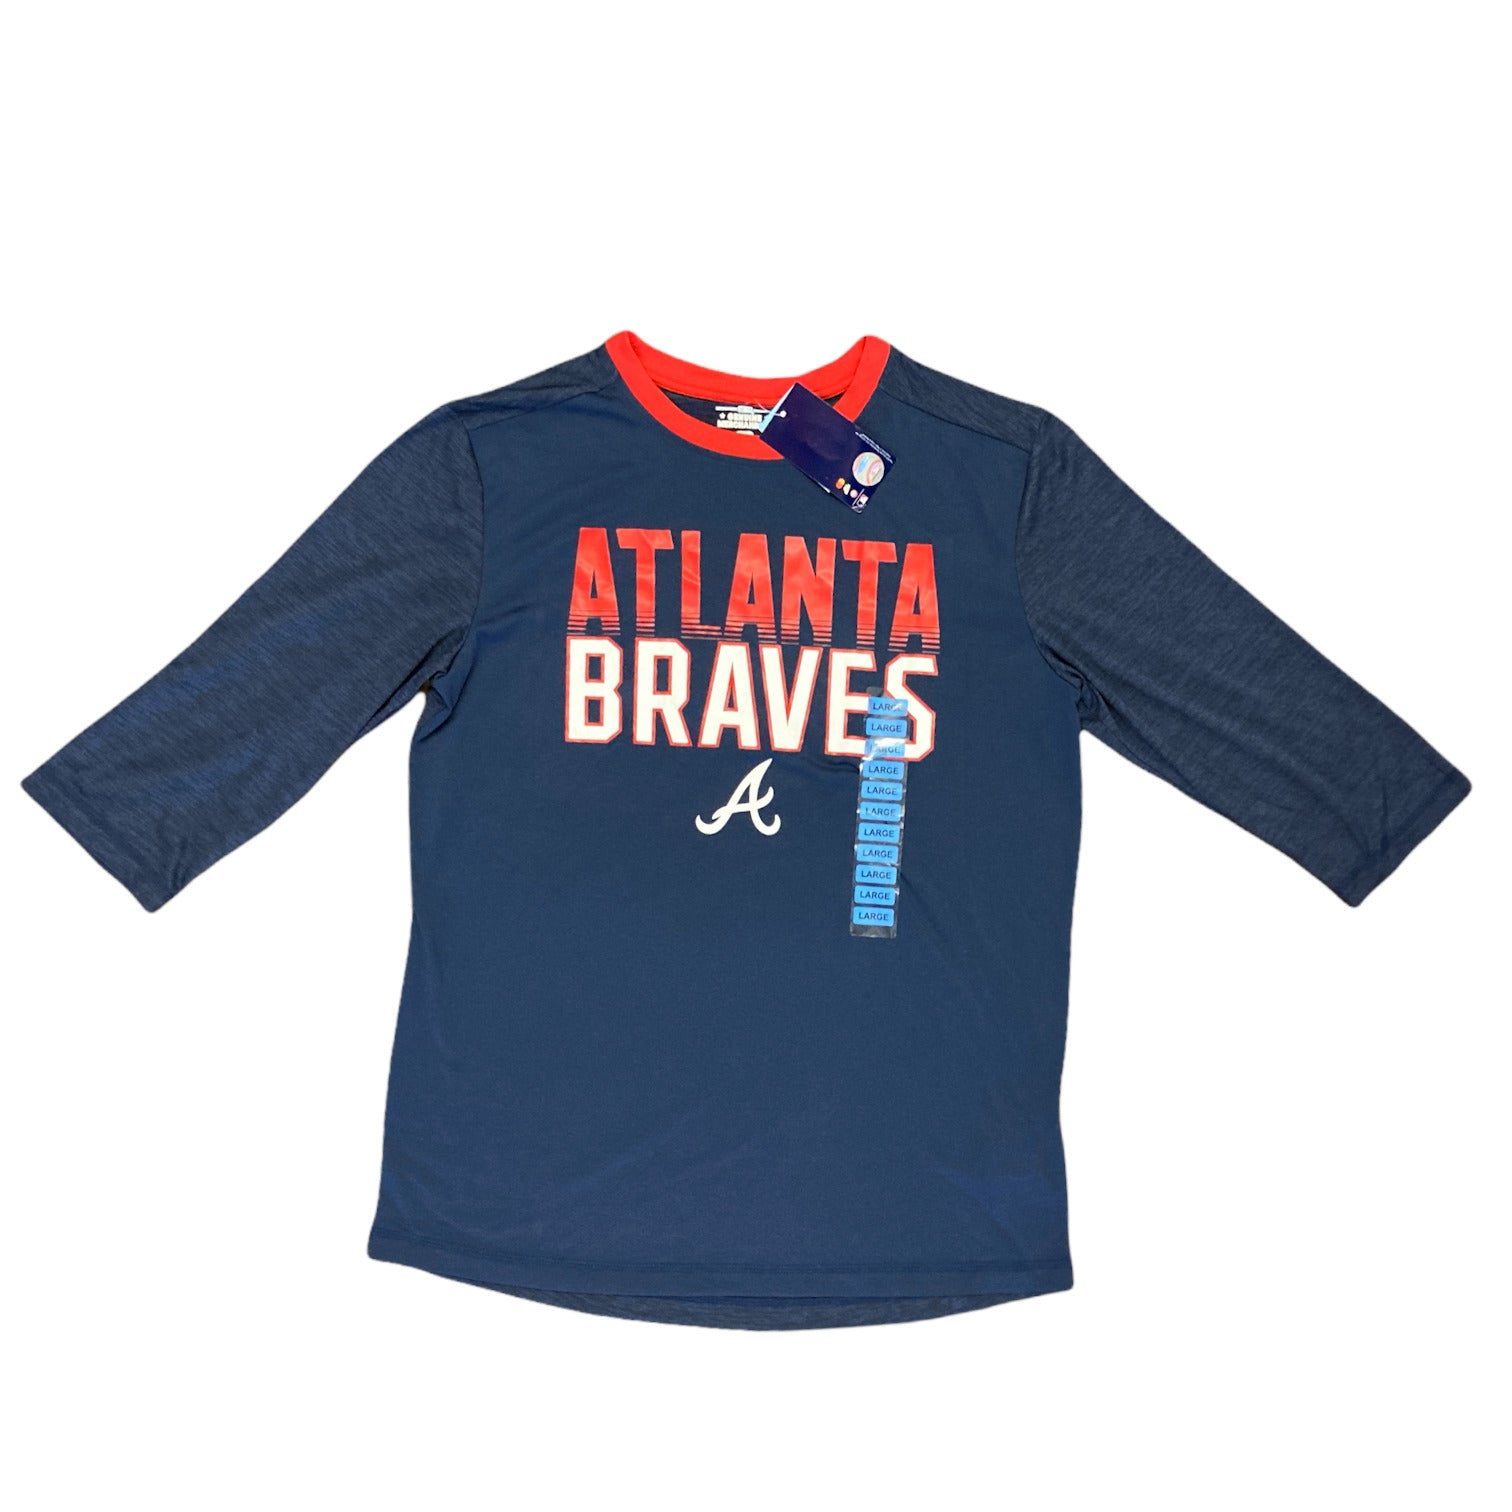  Your Fan Shop for Atlanta Braves